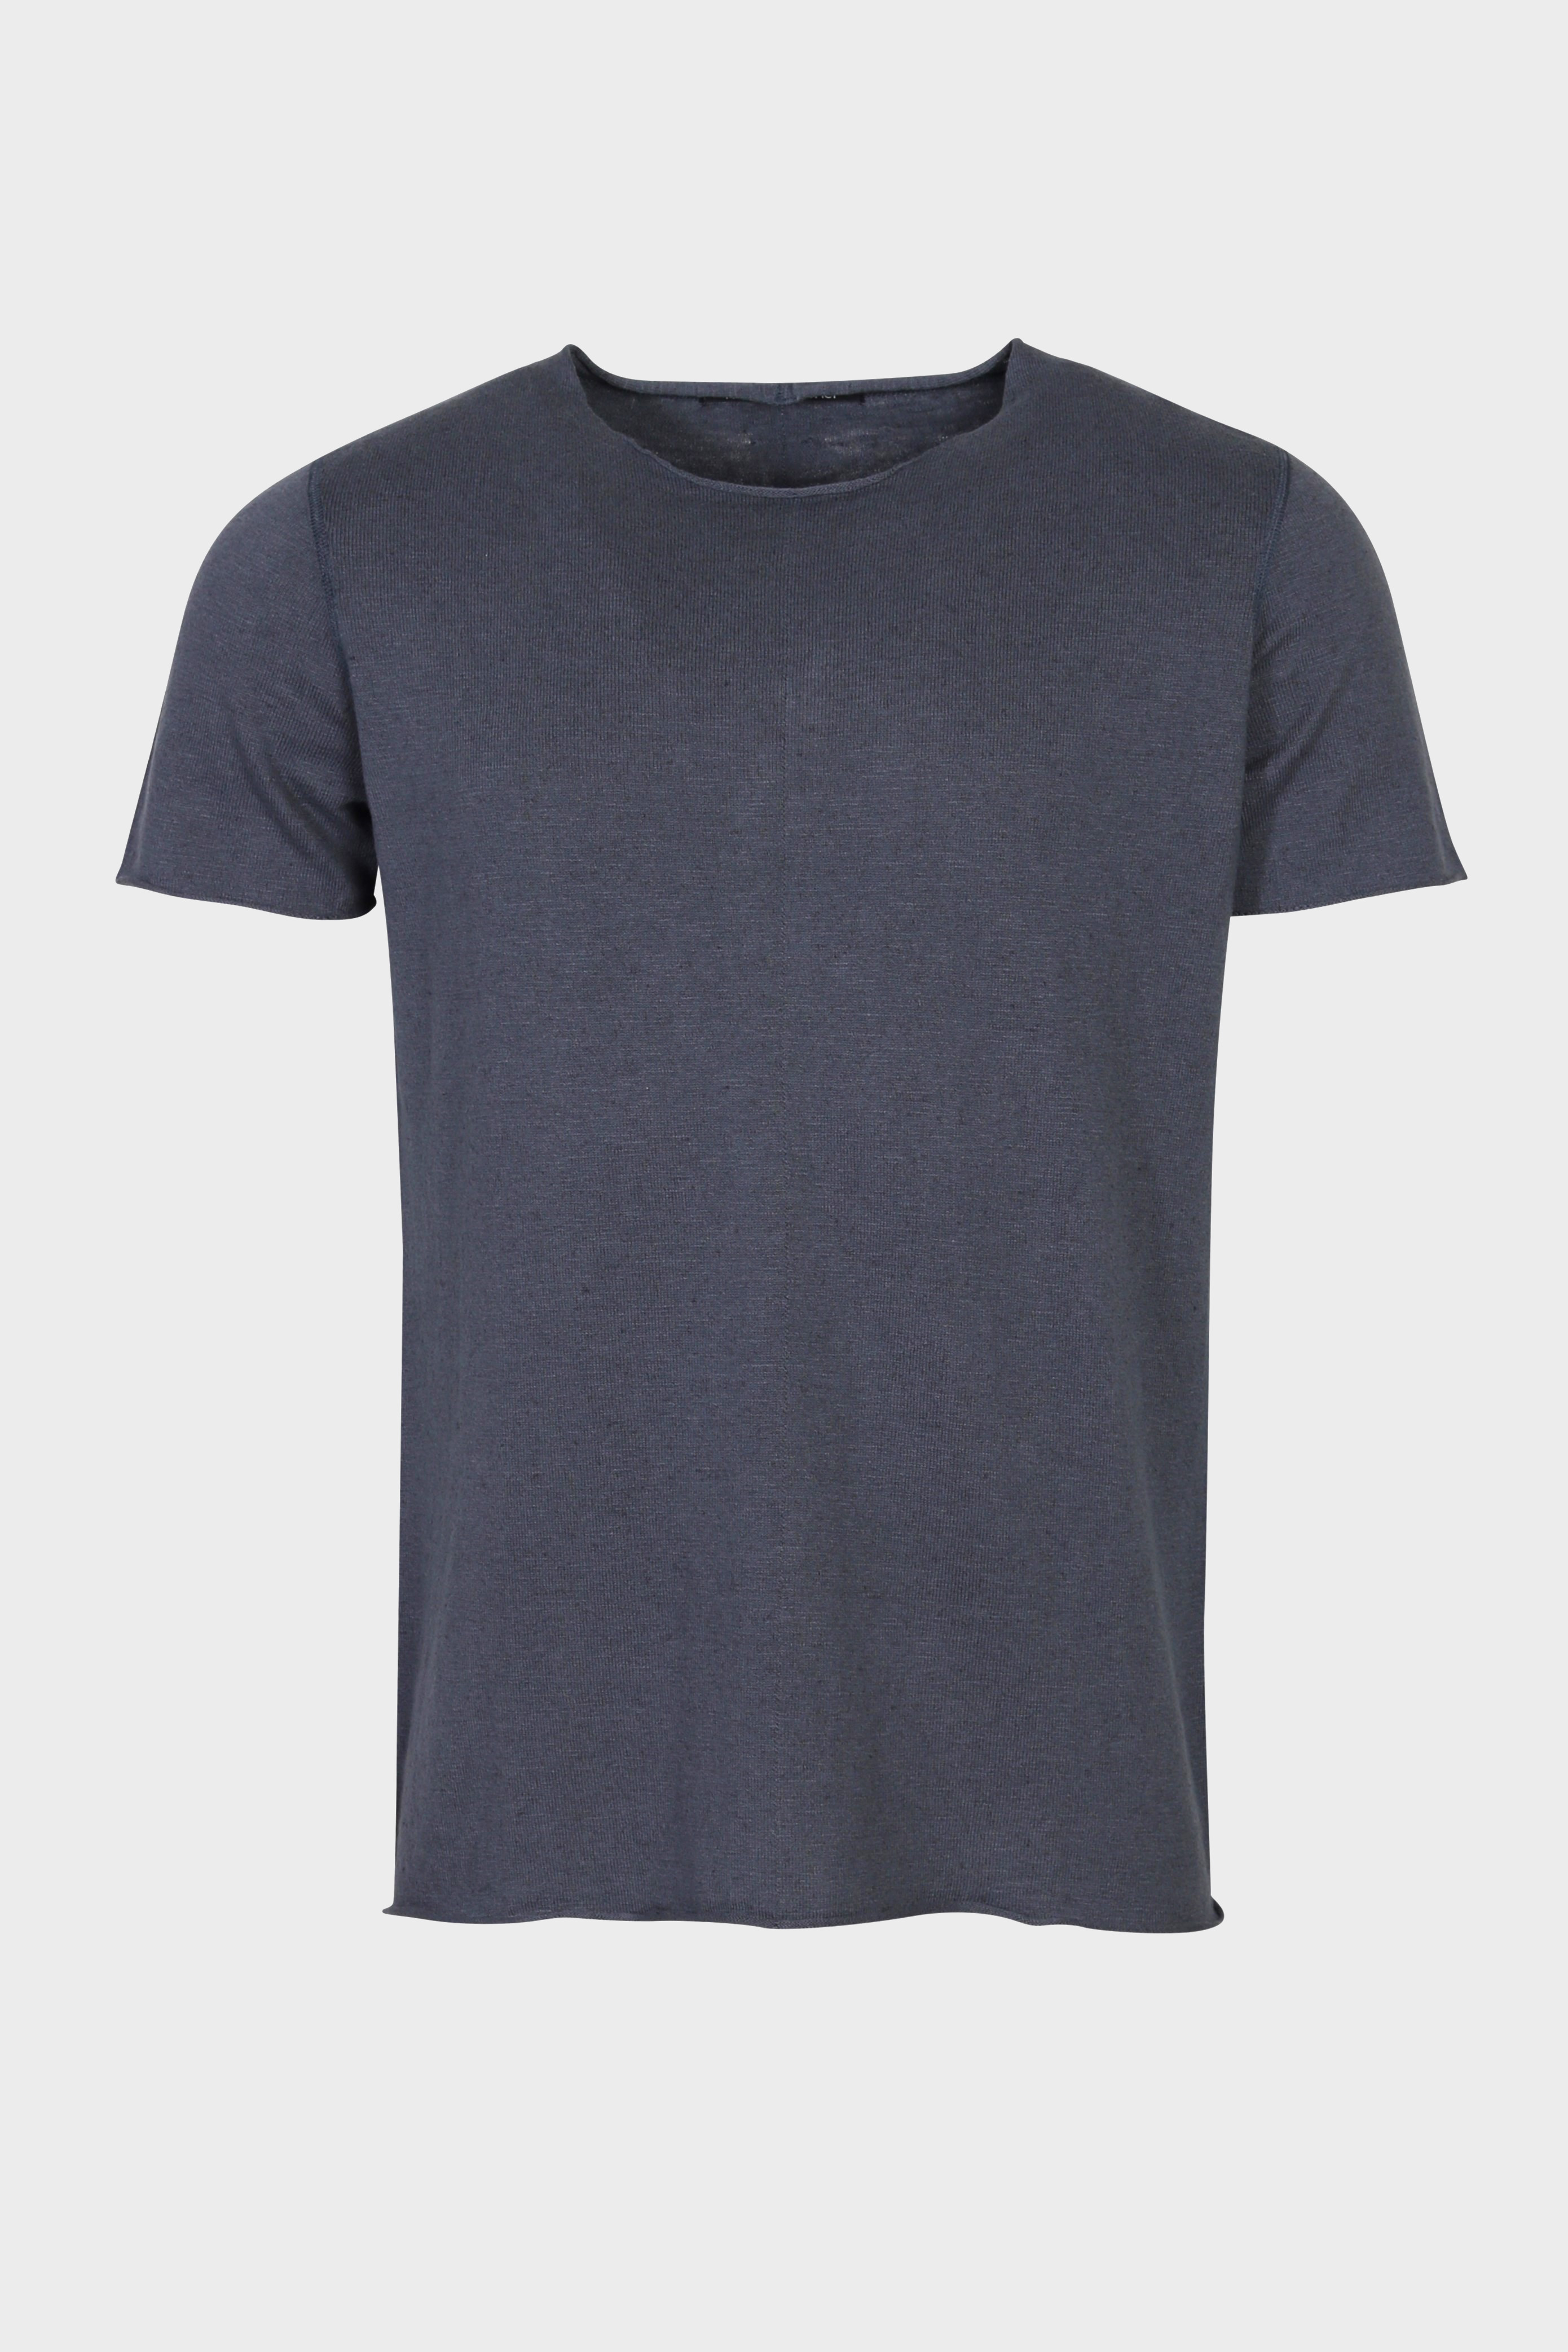 HANNES ROETHER Knit T-Shirt in Greyish Blue 3XL